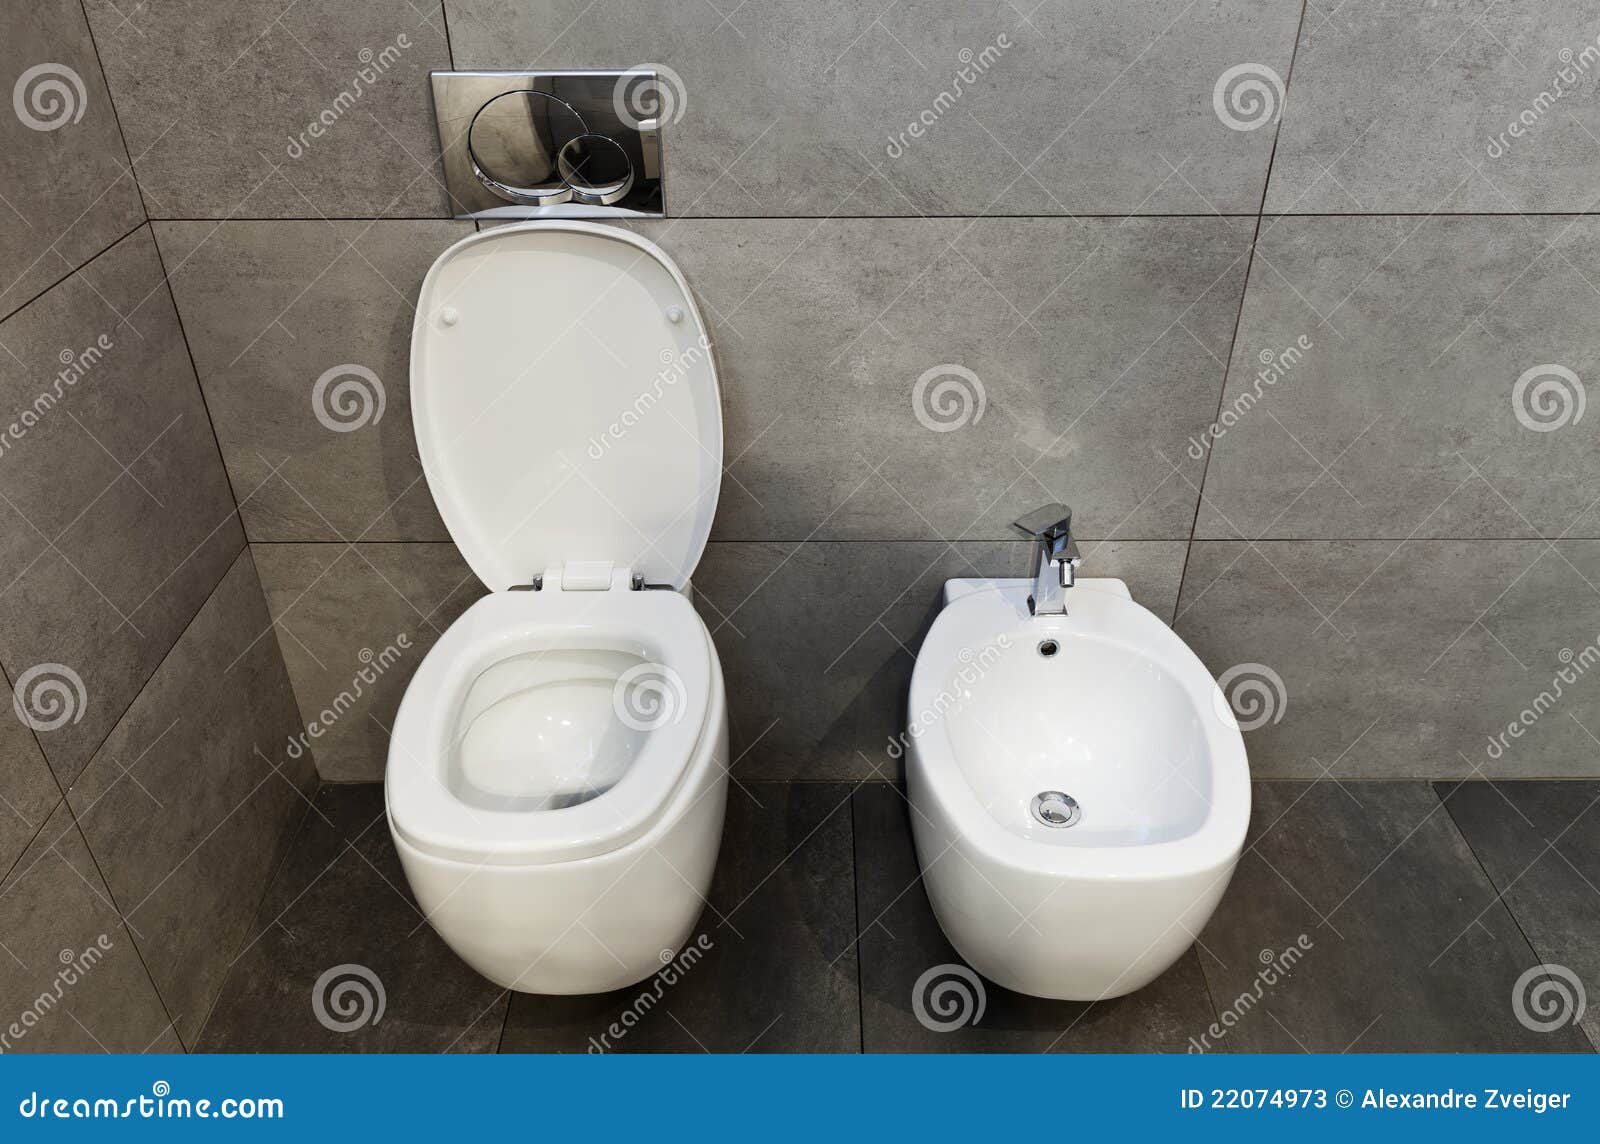 Wc and bidet stock image. Image of sanitary, interior - 22074973